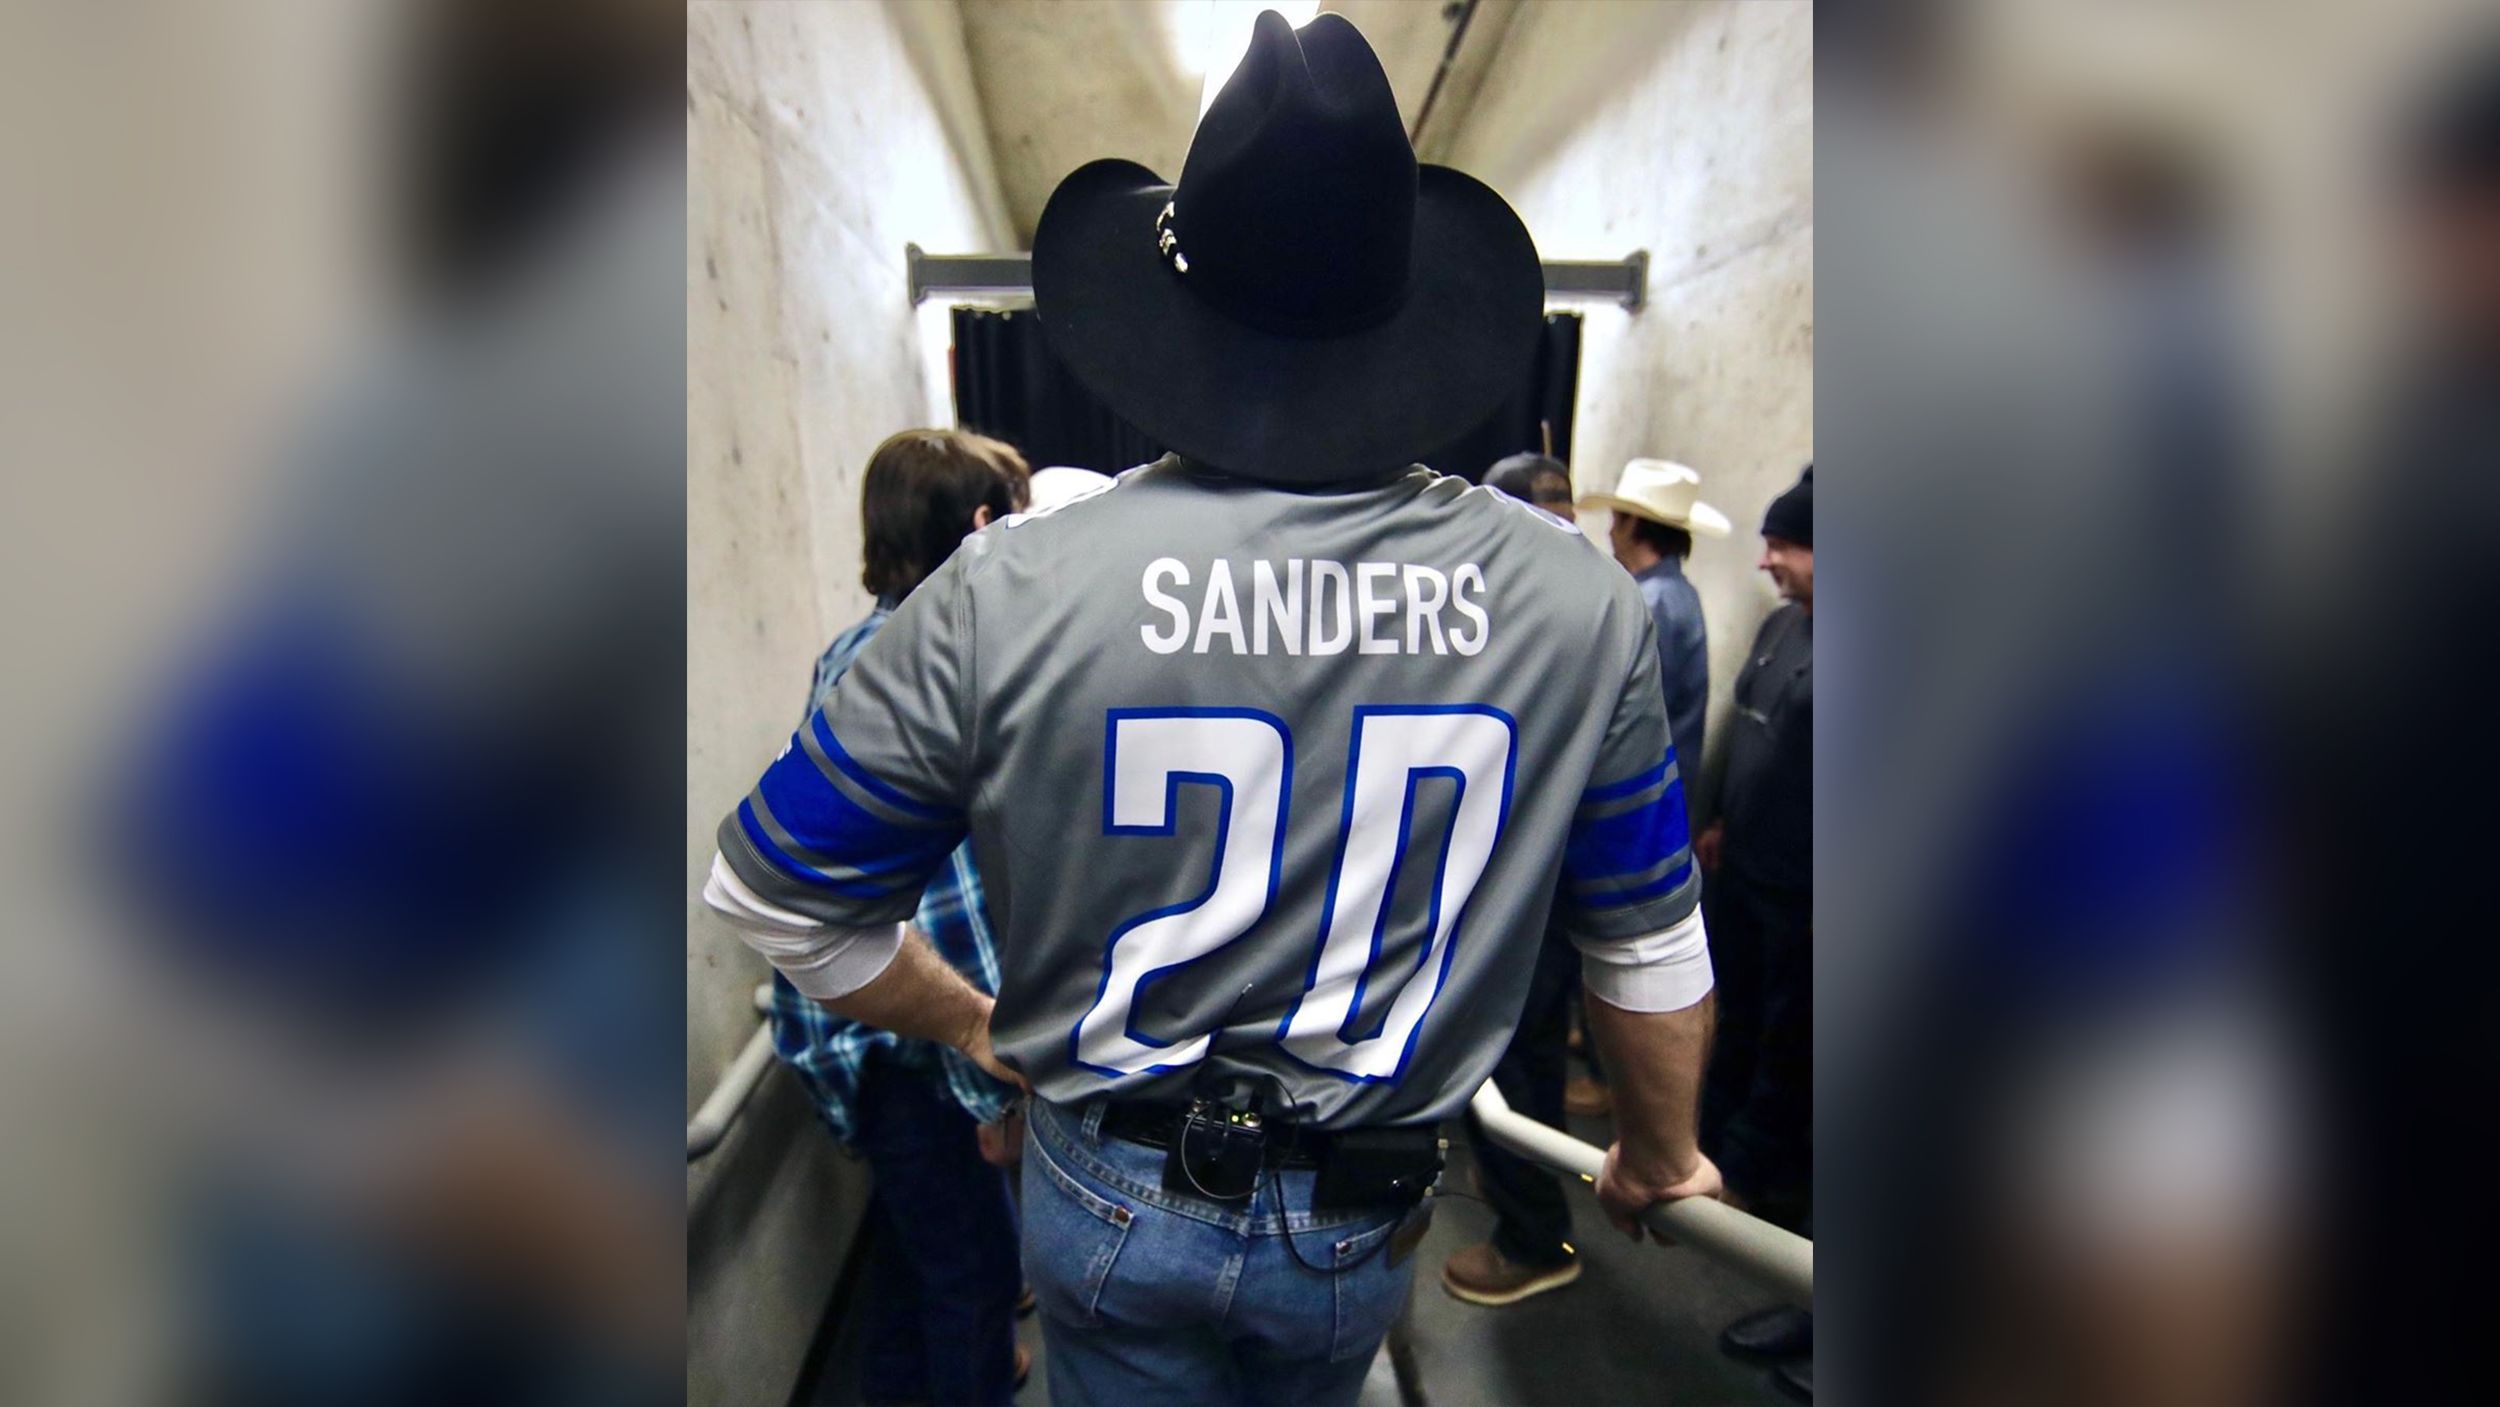 Barry Sanders 2020? Garth Brooks' Detroit Lions jersey mistaken